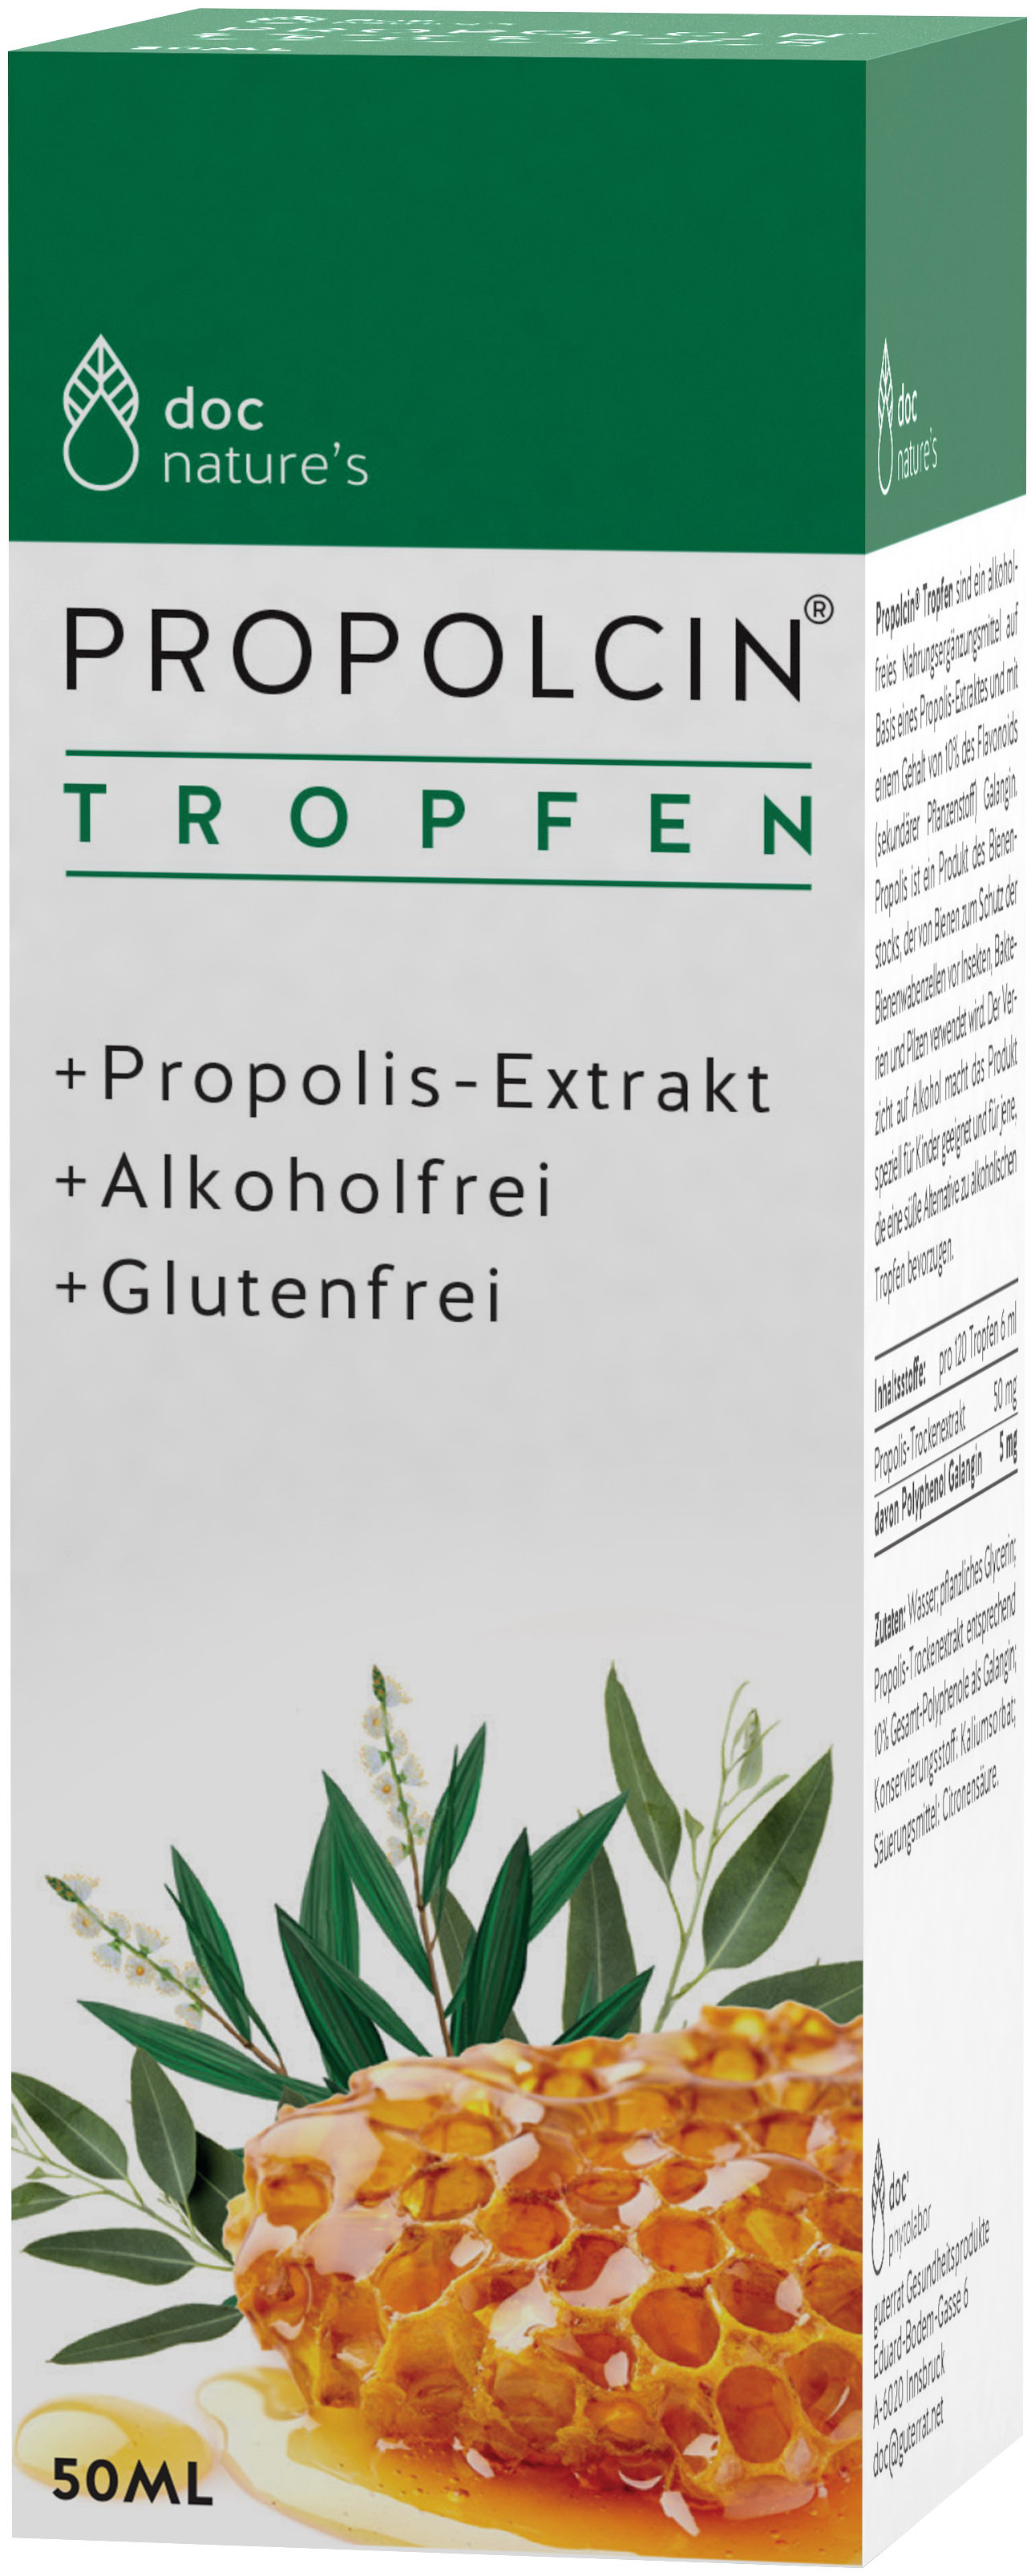 doc nature’s PROPOLCIN® Tropfen